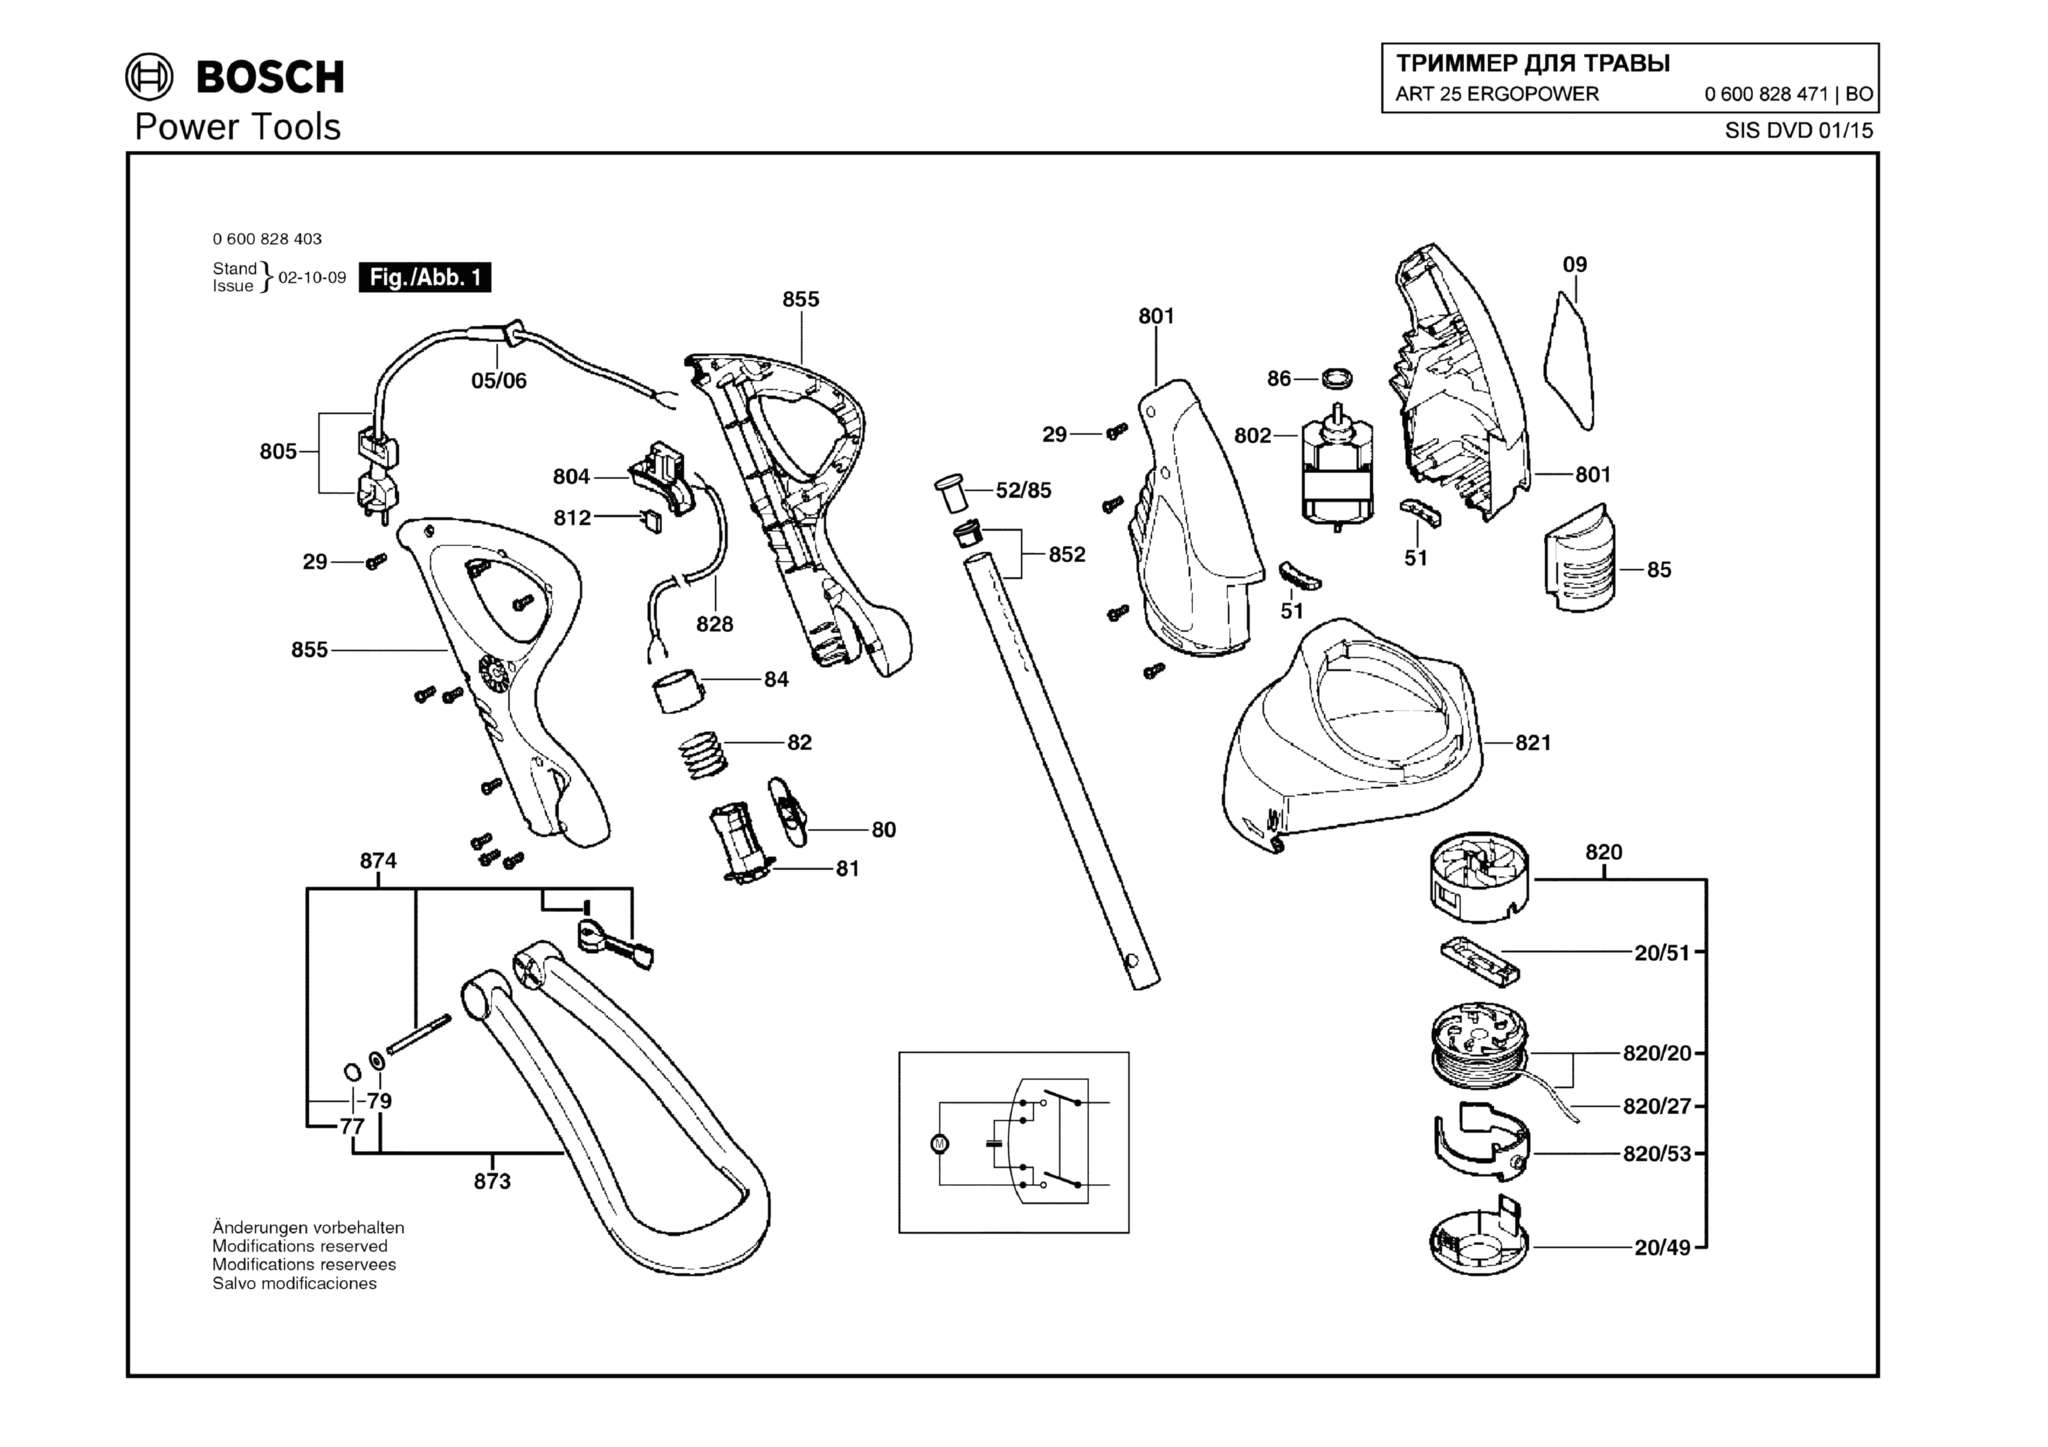 Запчасти, схема и деталировка Bosch ART 25 ERGOPOWER (ТИП 0600828471)